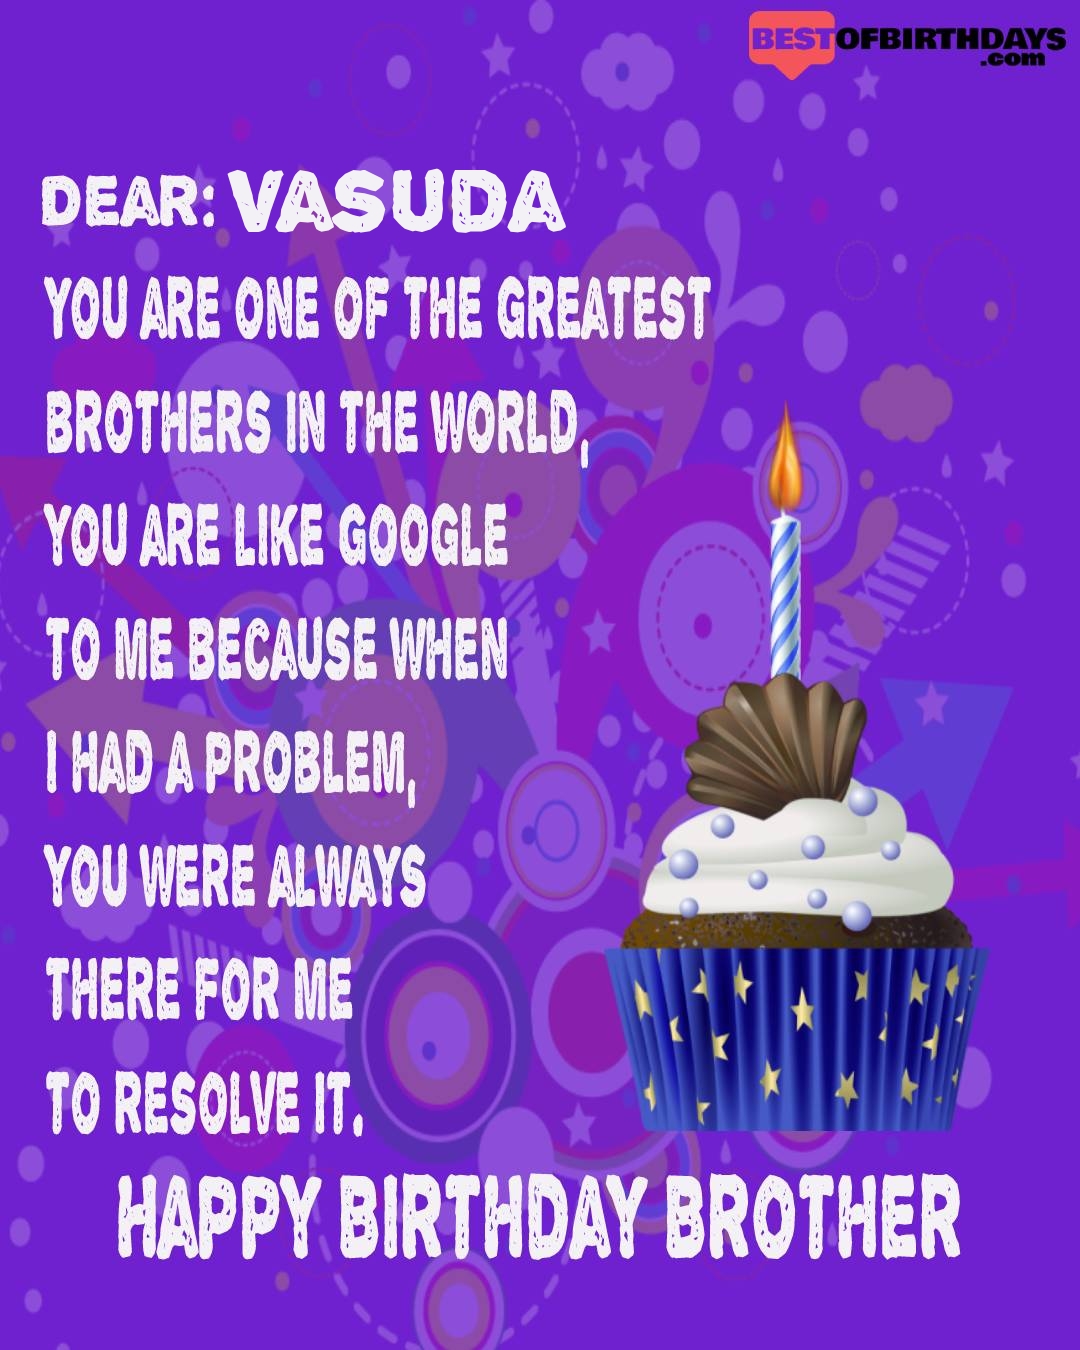 Happy birthday vasuda bhai brother bro